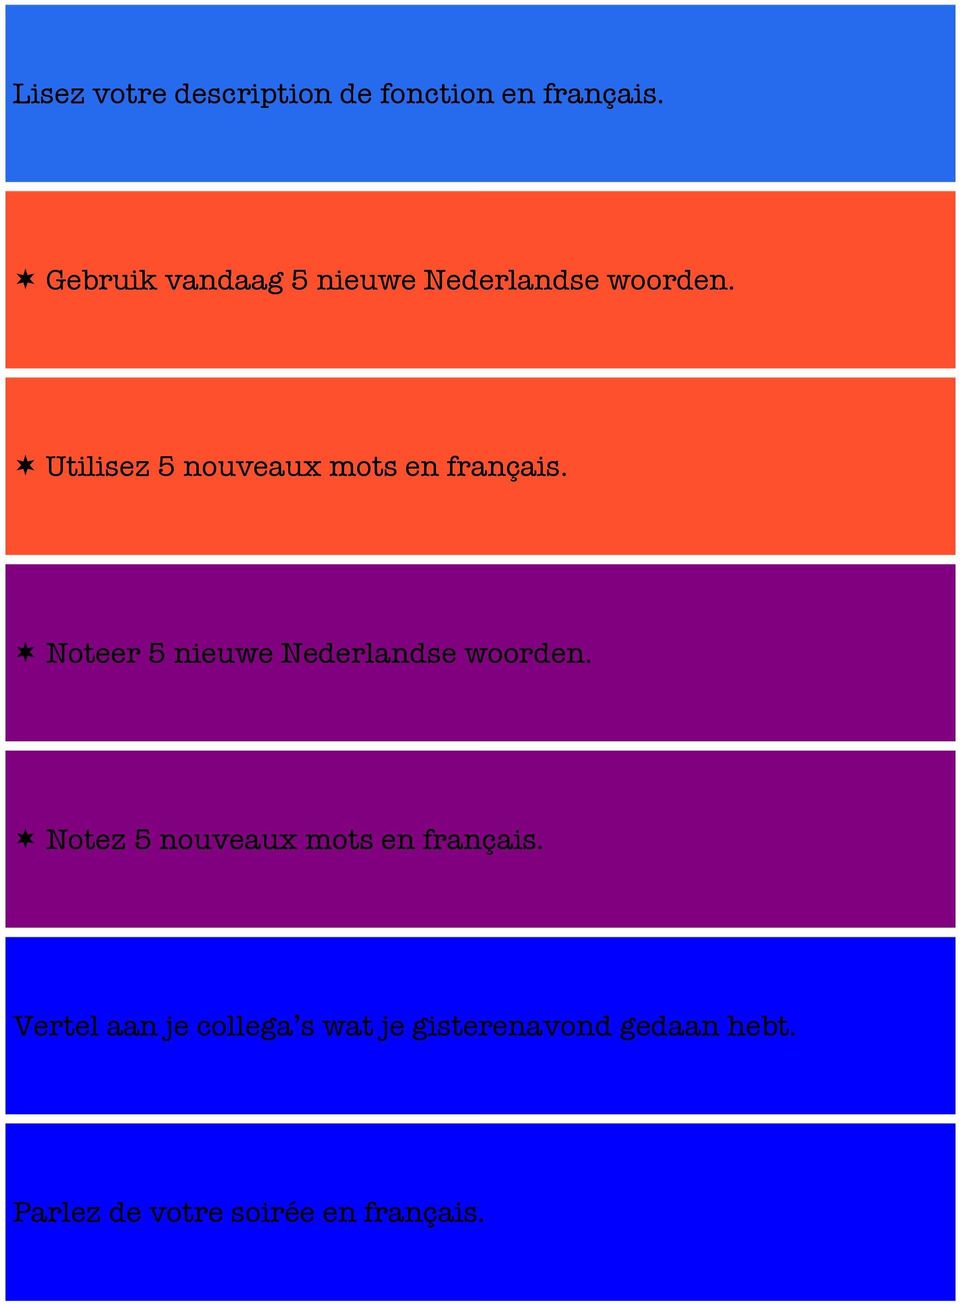 Utilisez 5 nouveaux mots en français. Noteer 5 nieuwe Nederlandse woorden.